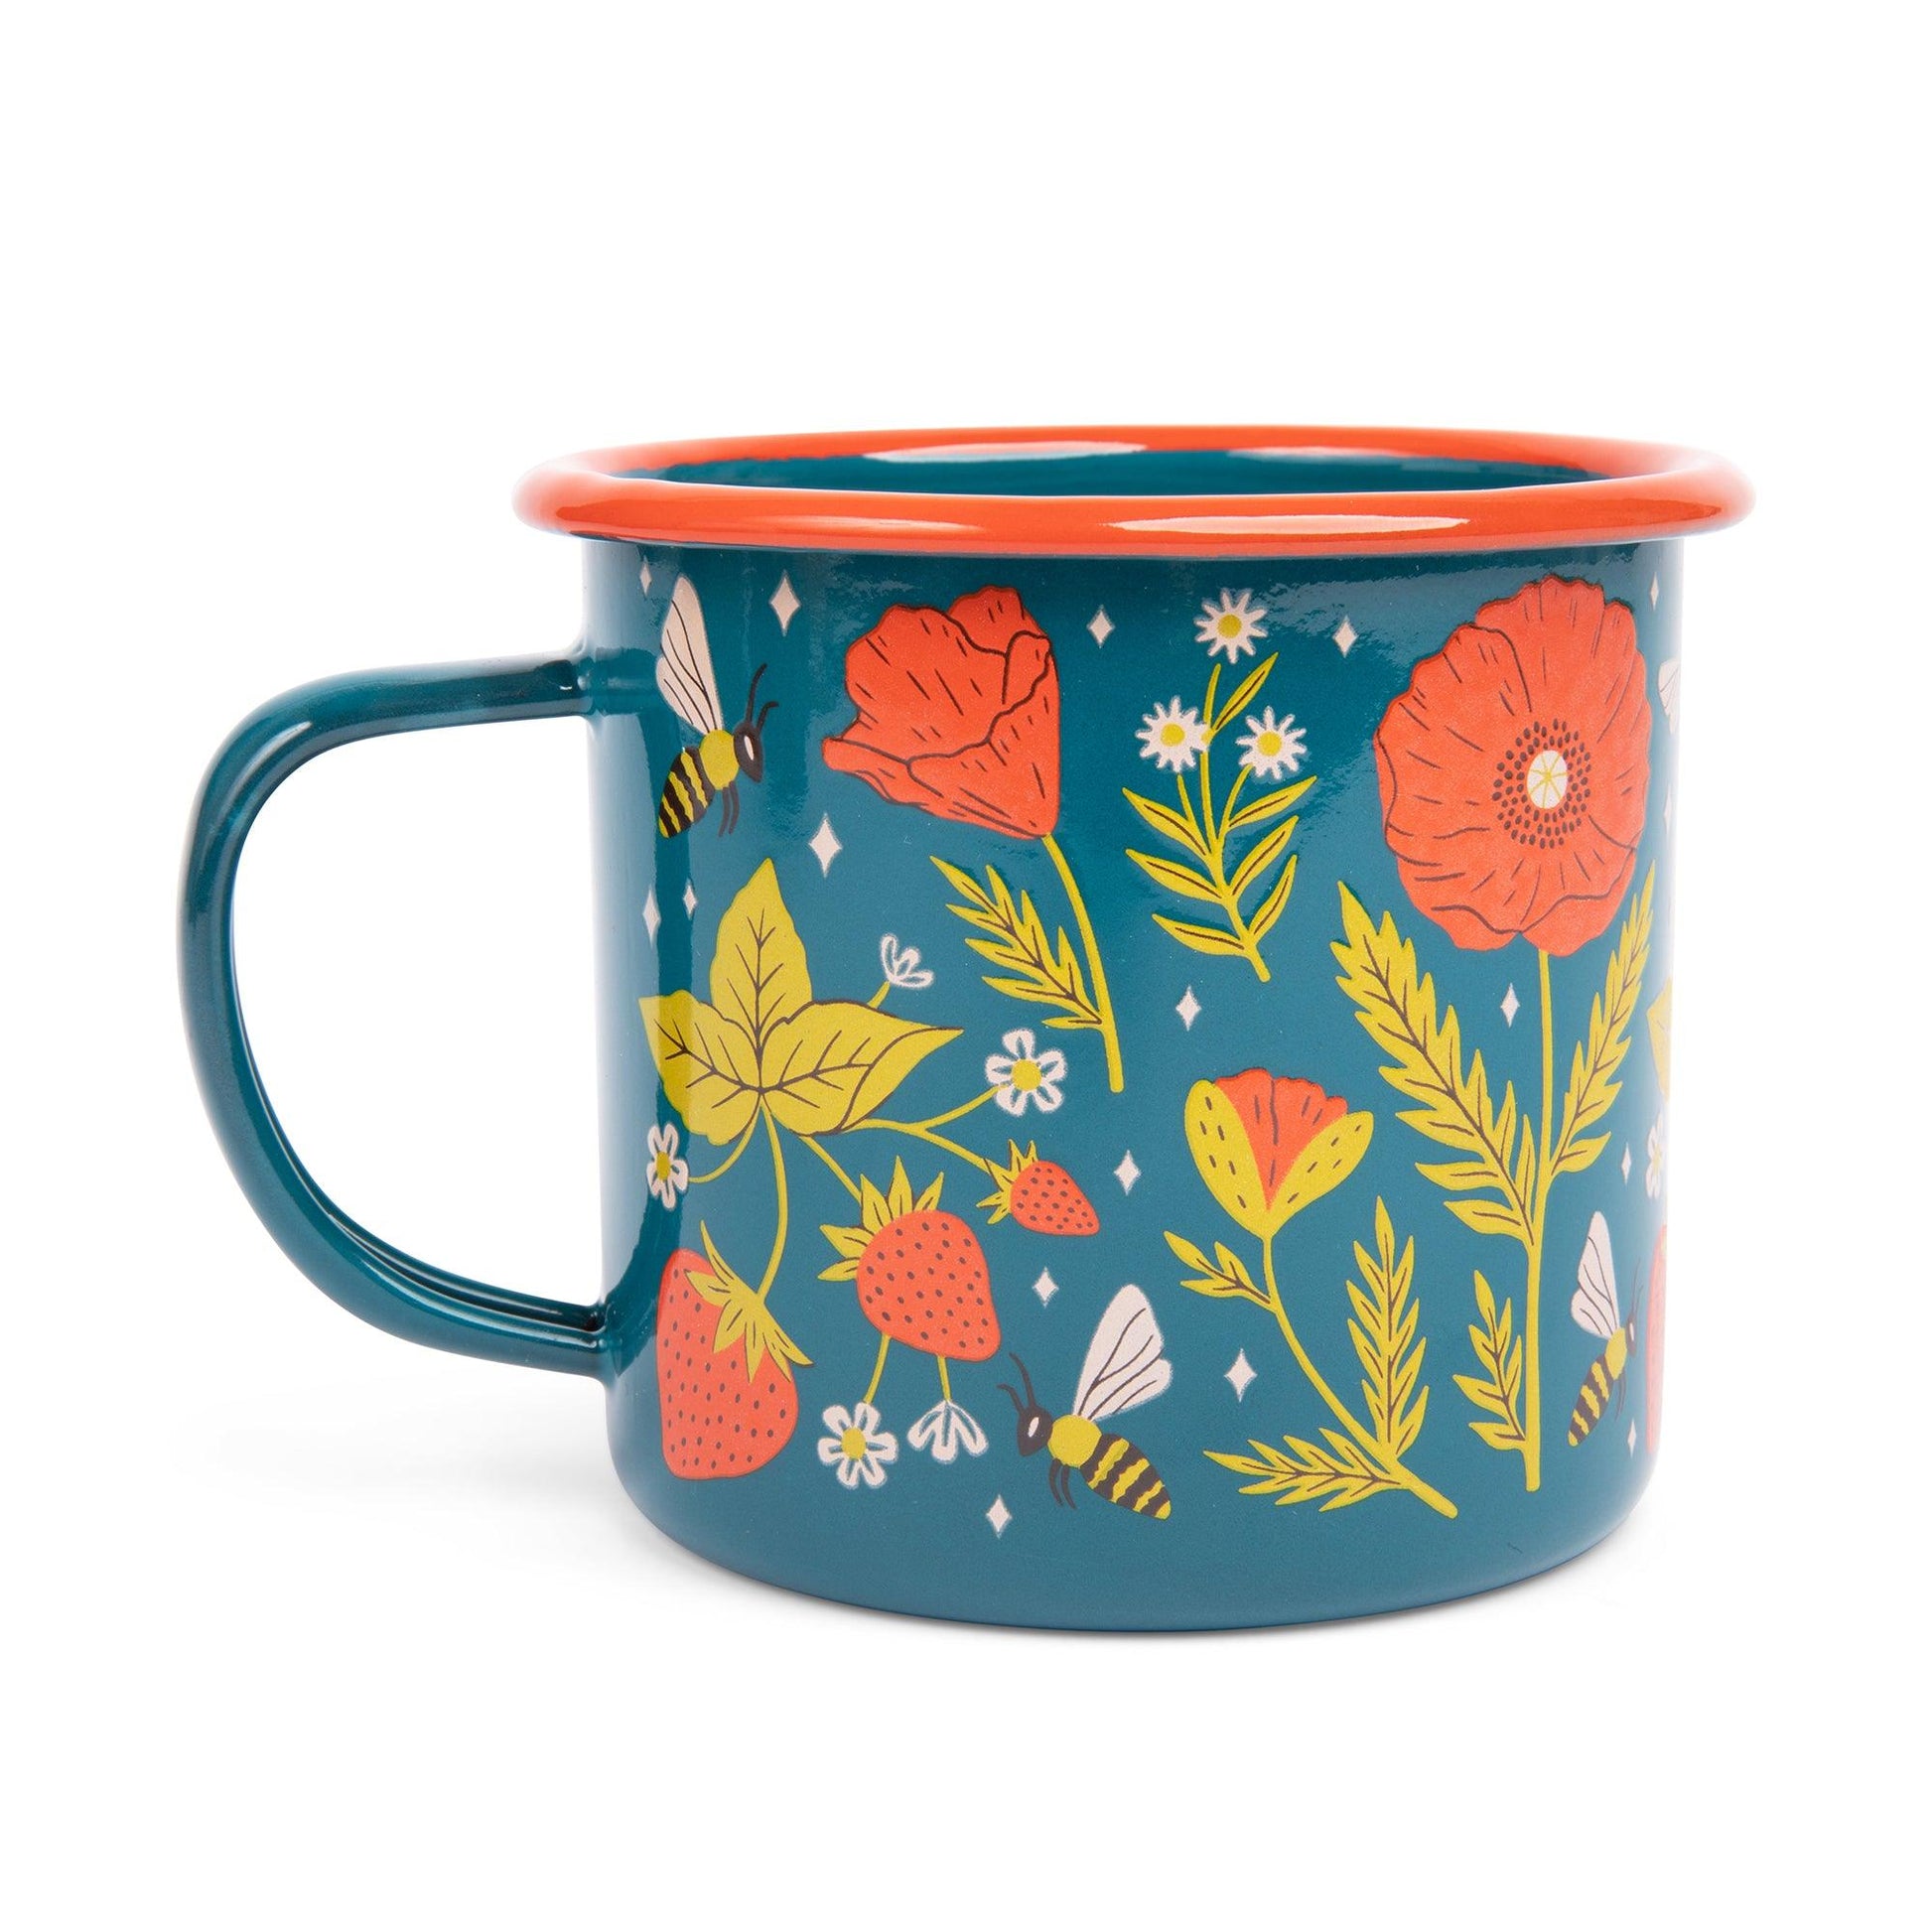 Wild Flower Coffee Mugs, Hand Painted Mugs With Wild Flowers, Set of 2 